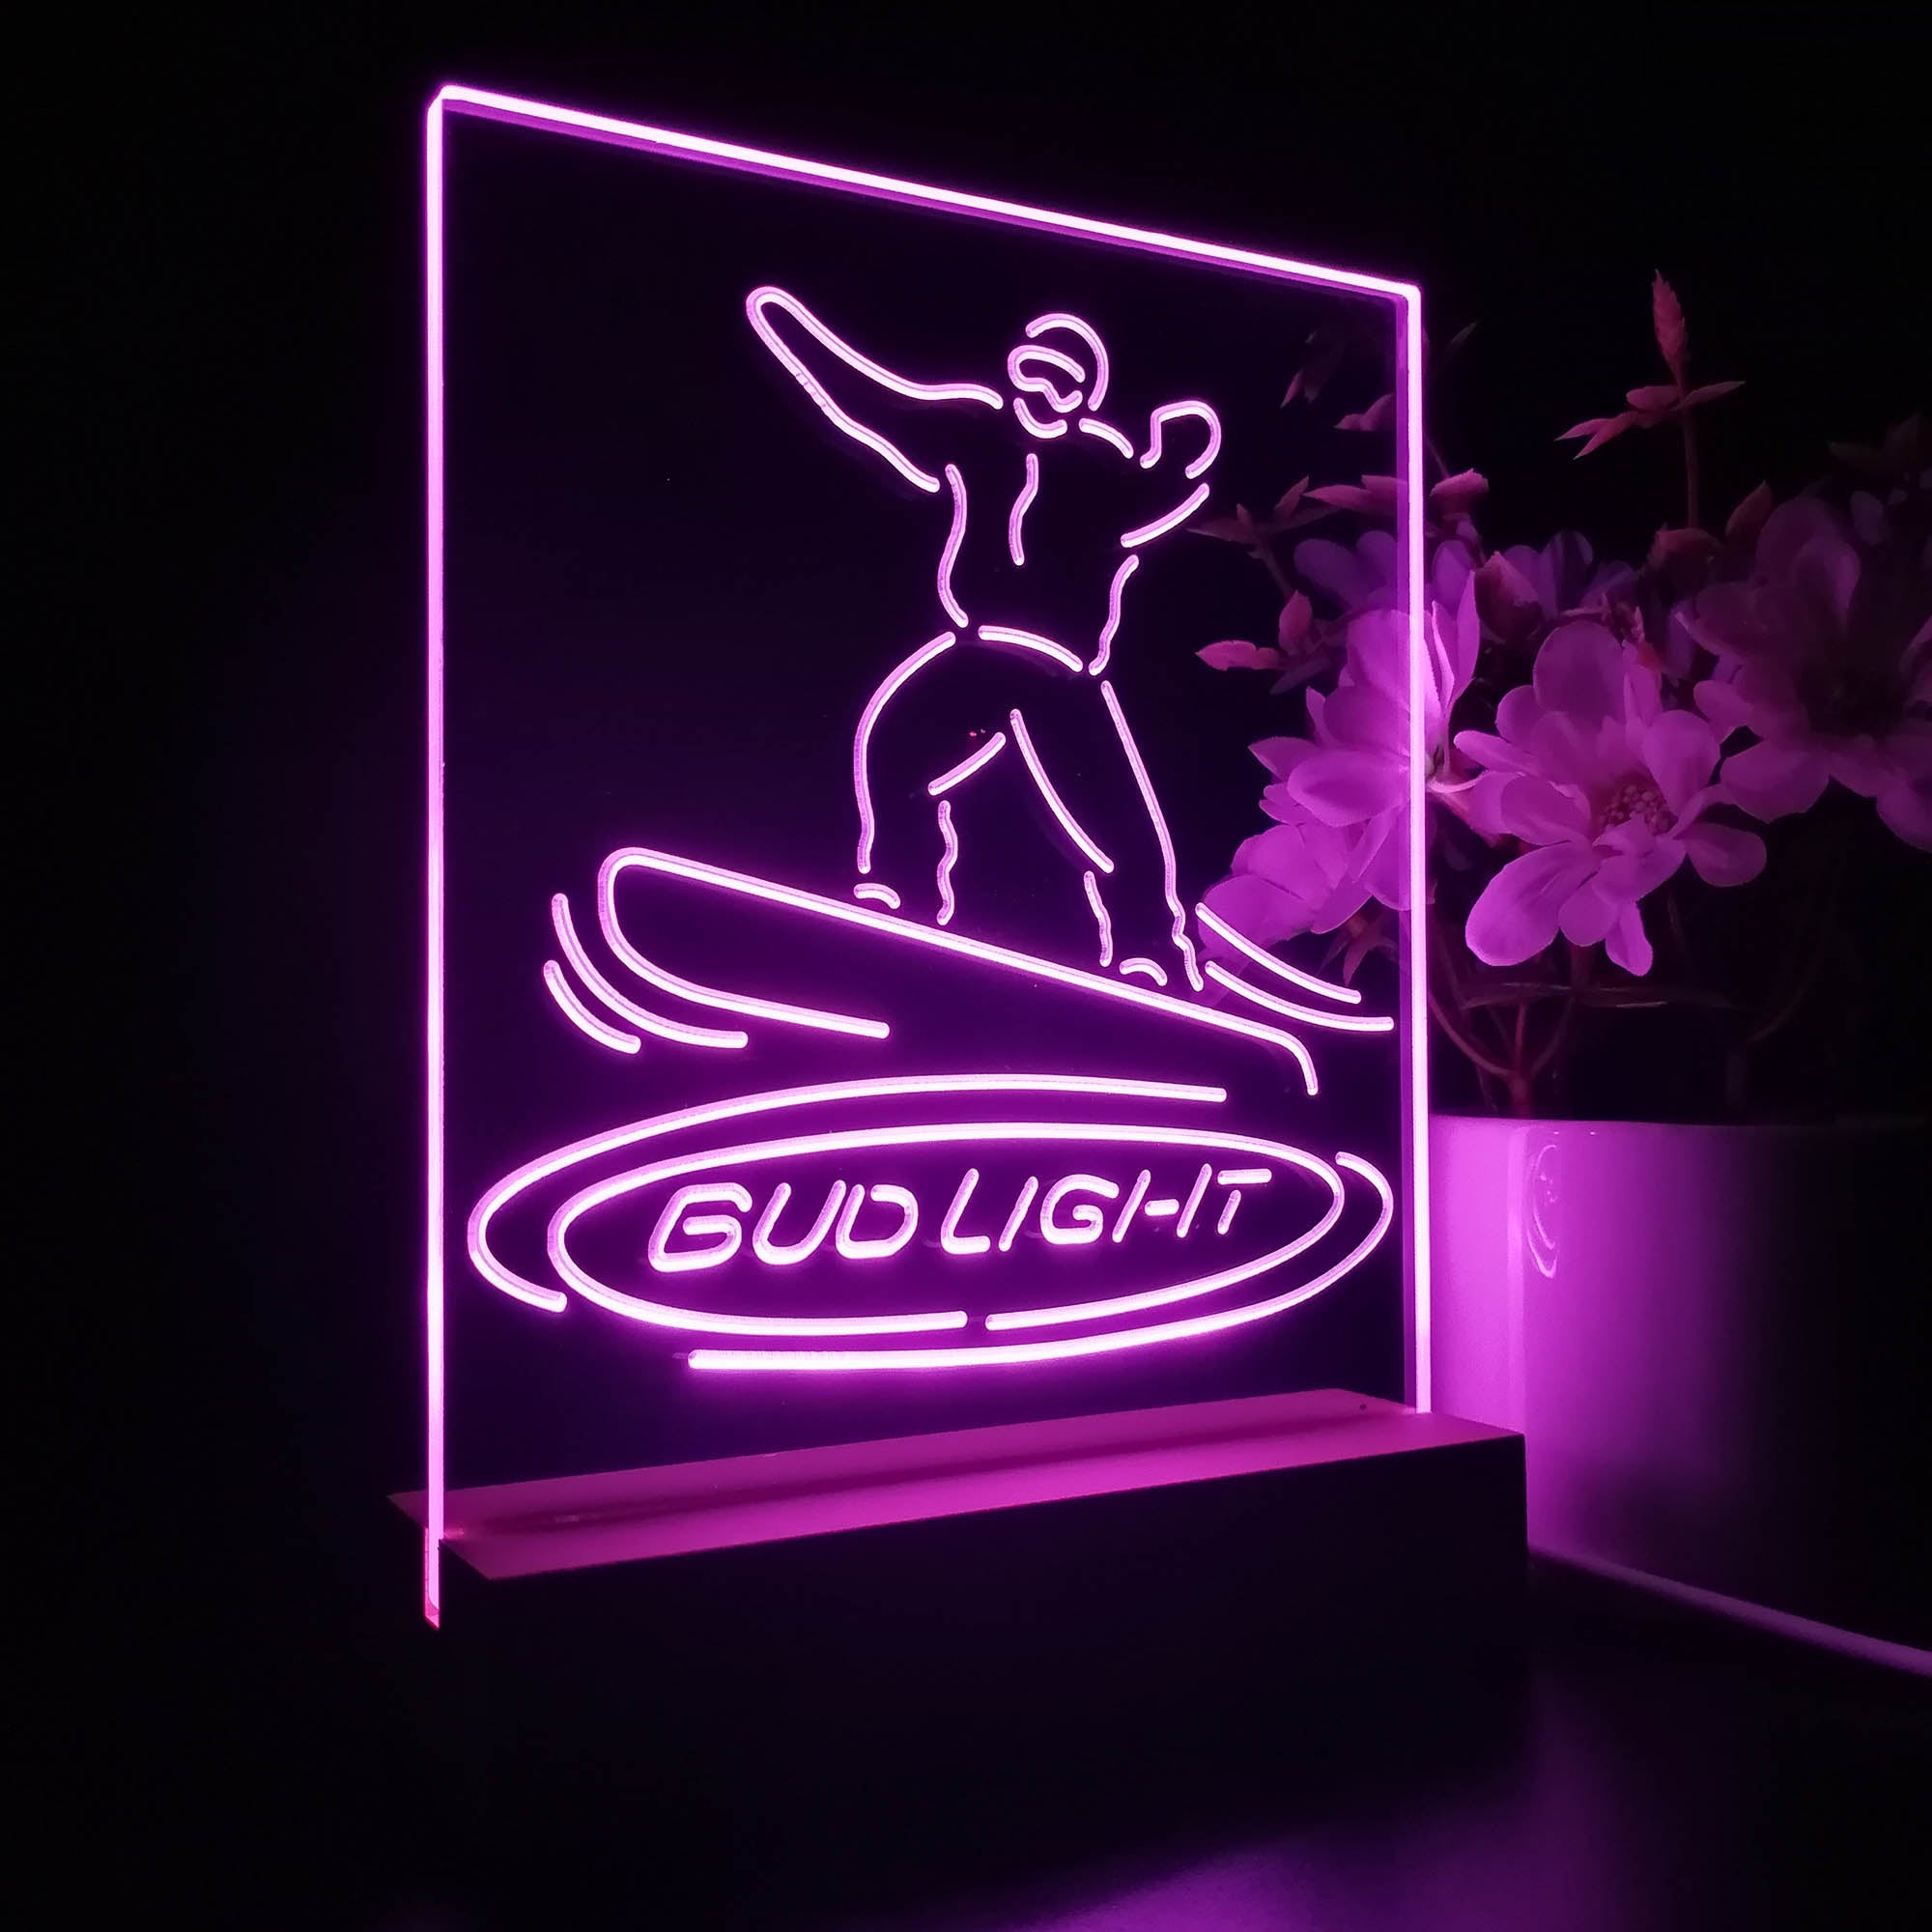 Bud Light Snowboarder Night Light Neon Pub Bar Lamp